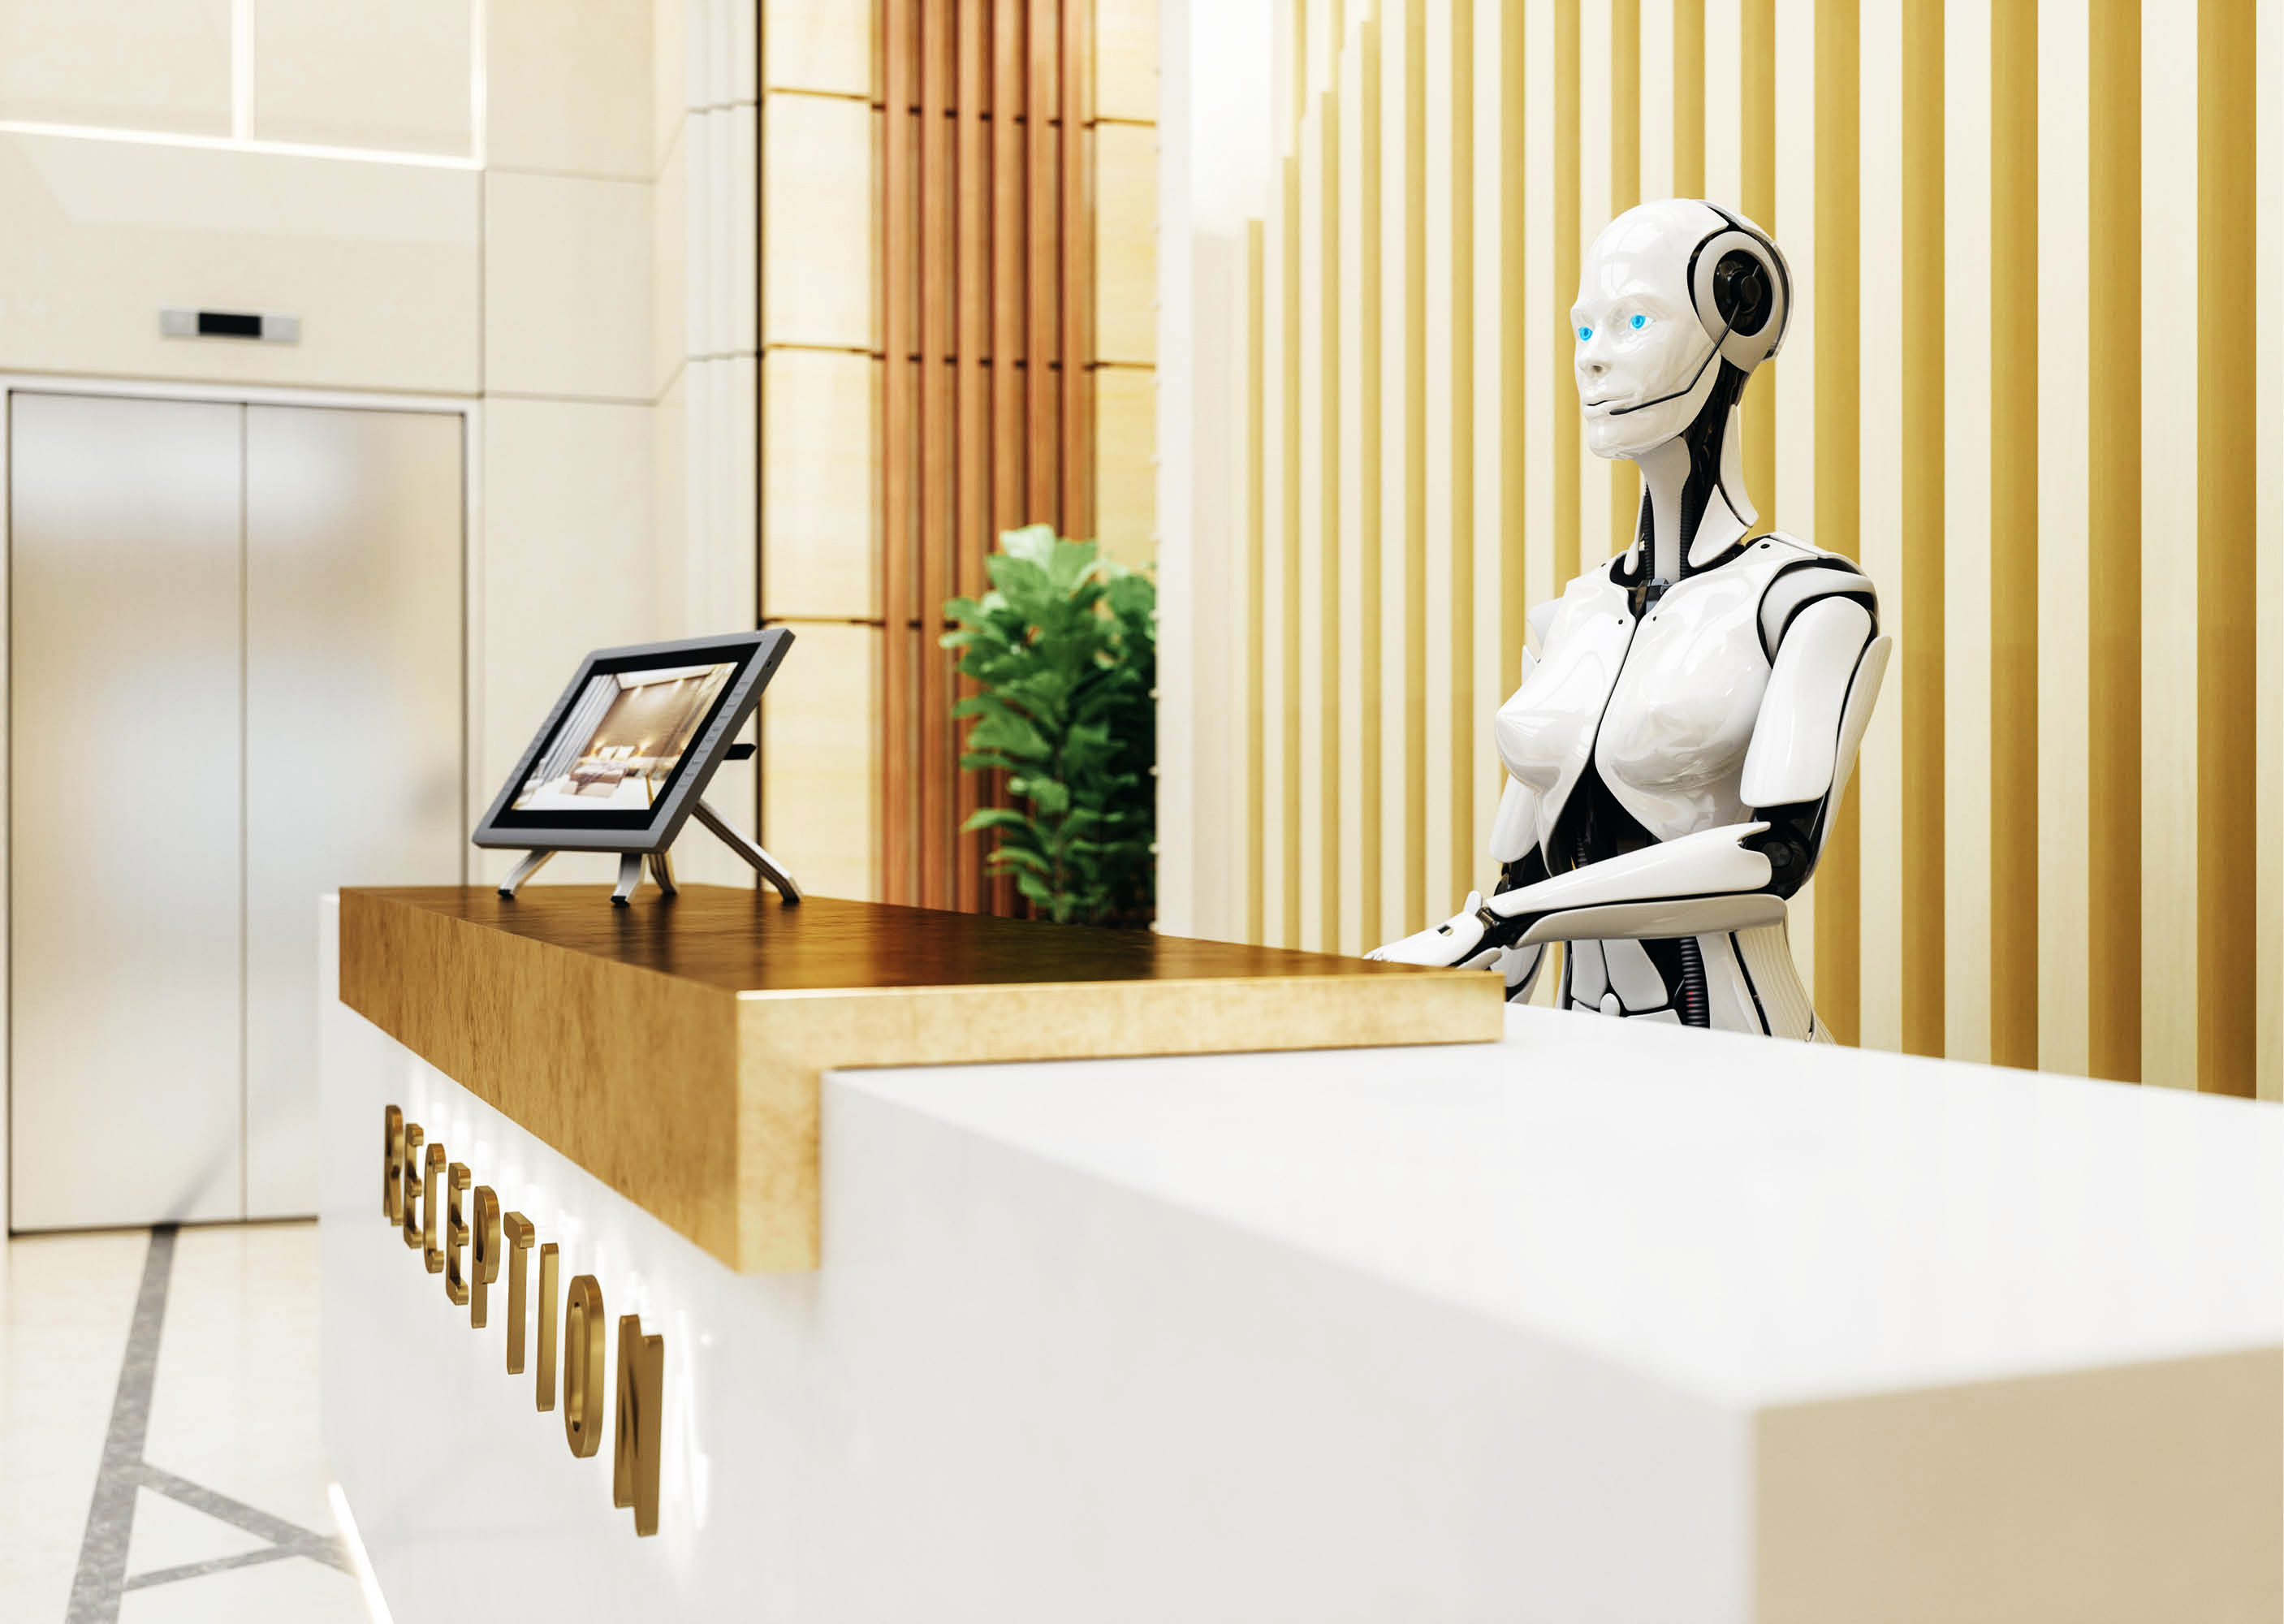 Robot greeter at hotel front desk